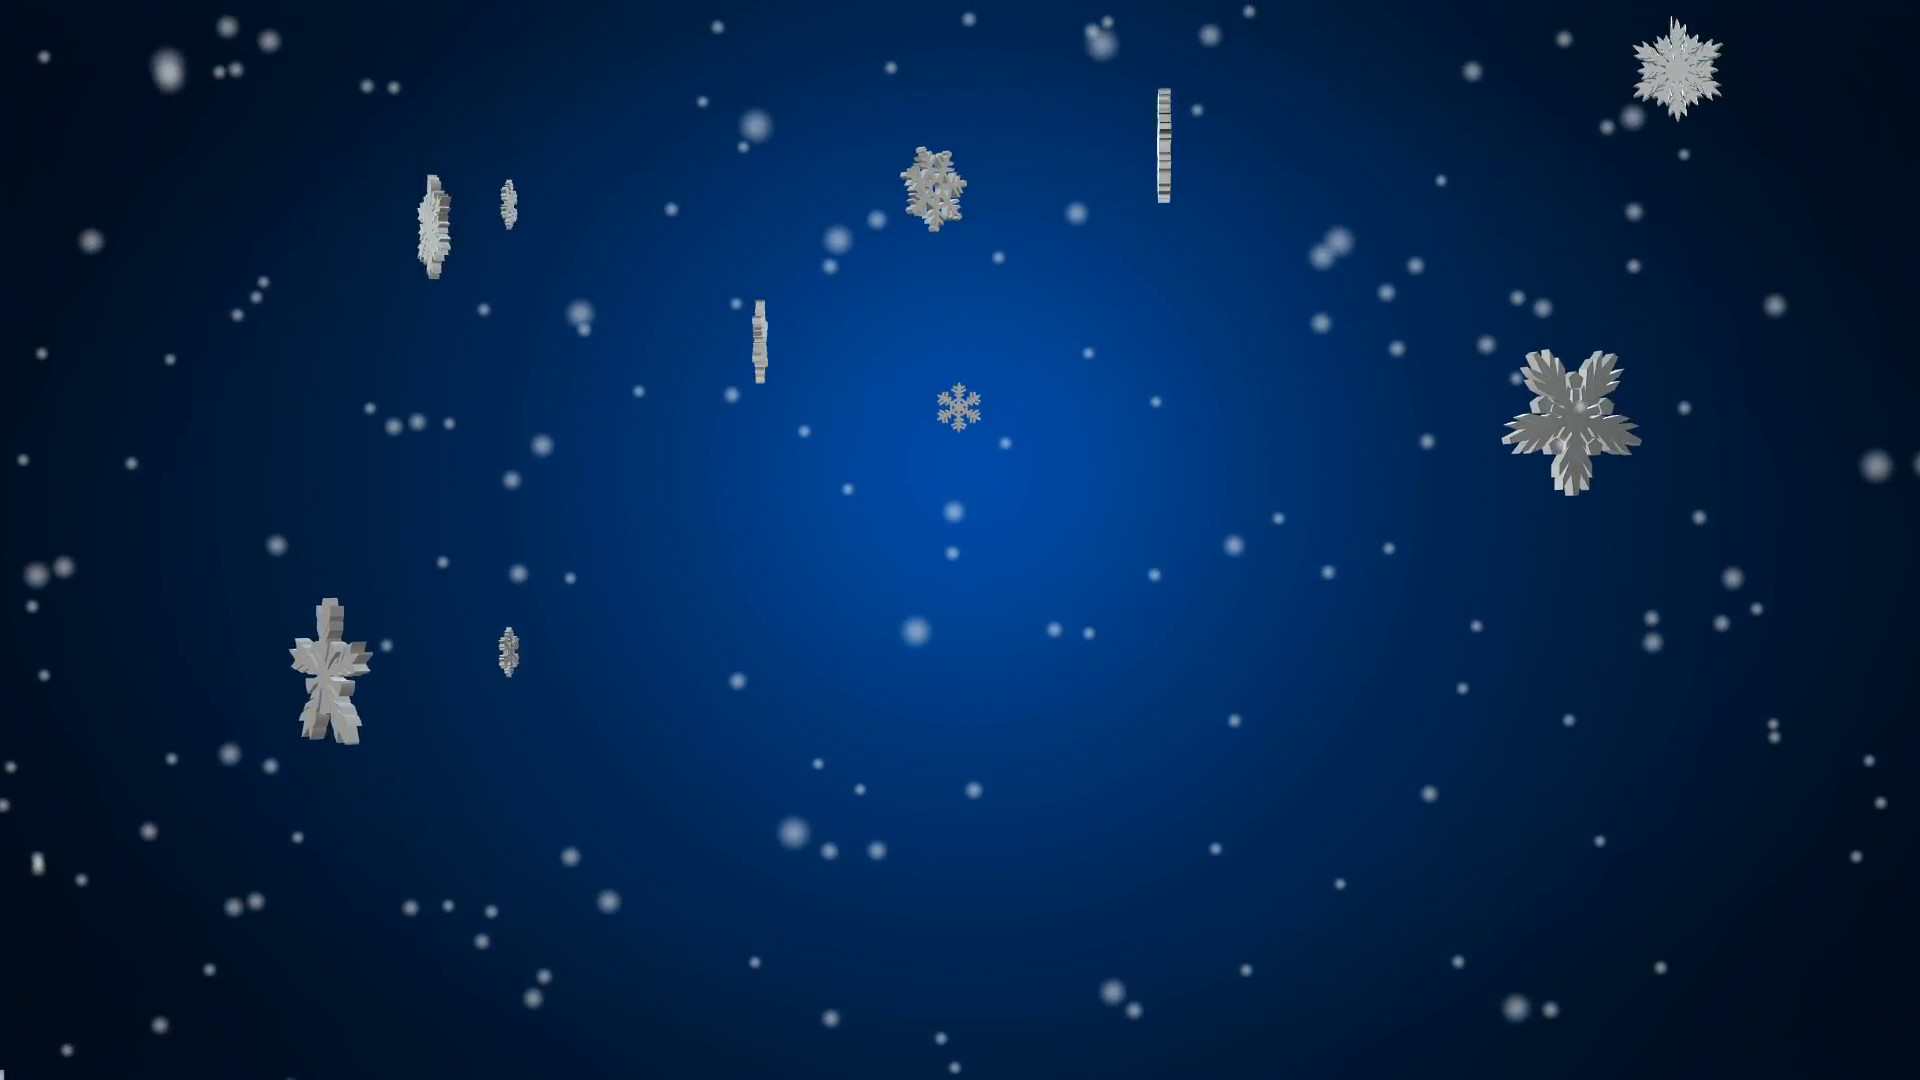 1920x1080 Snowflake Holiday Animation on Blue Background